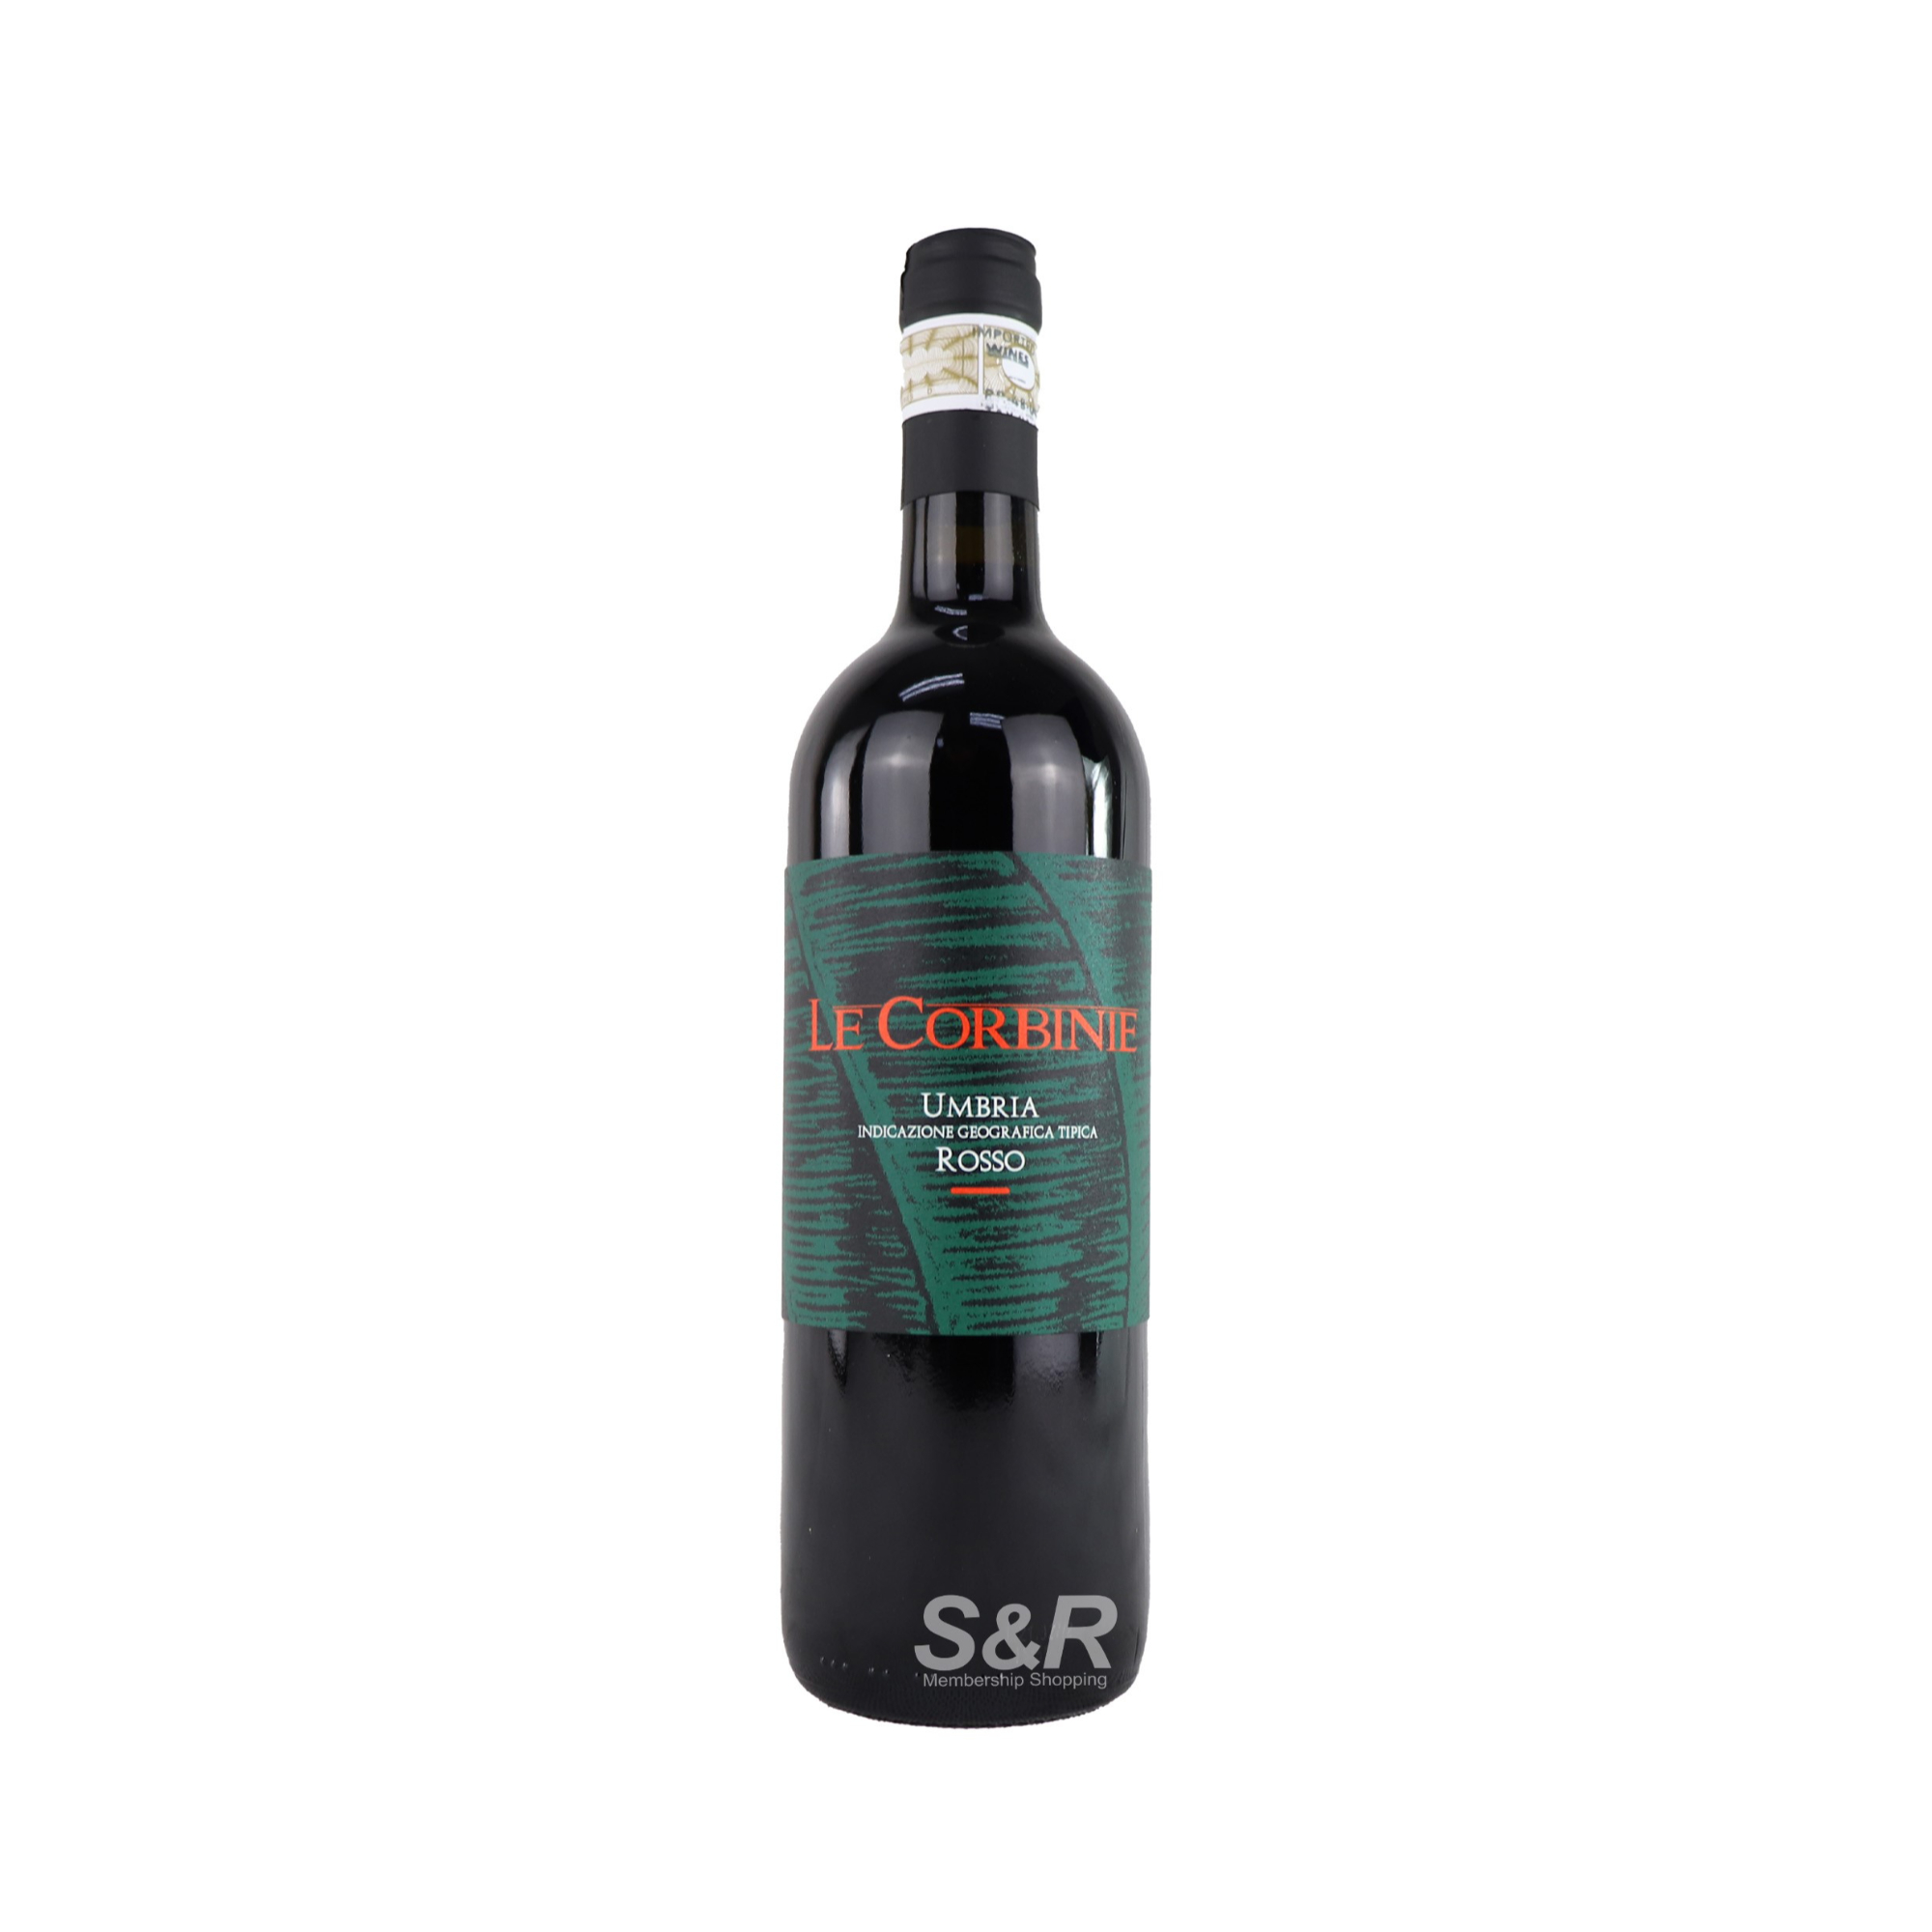 Le Corbinie Umbria IGT Red Wine 750mL